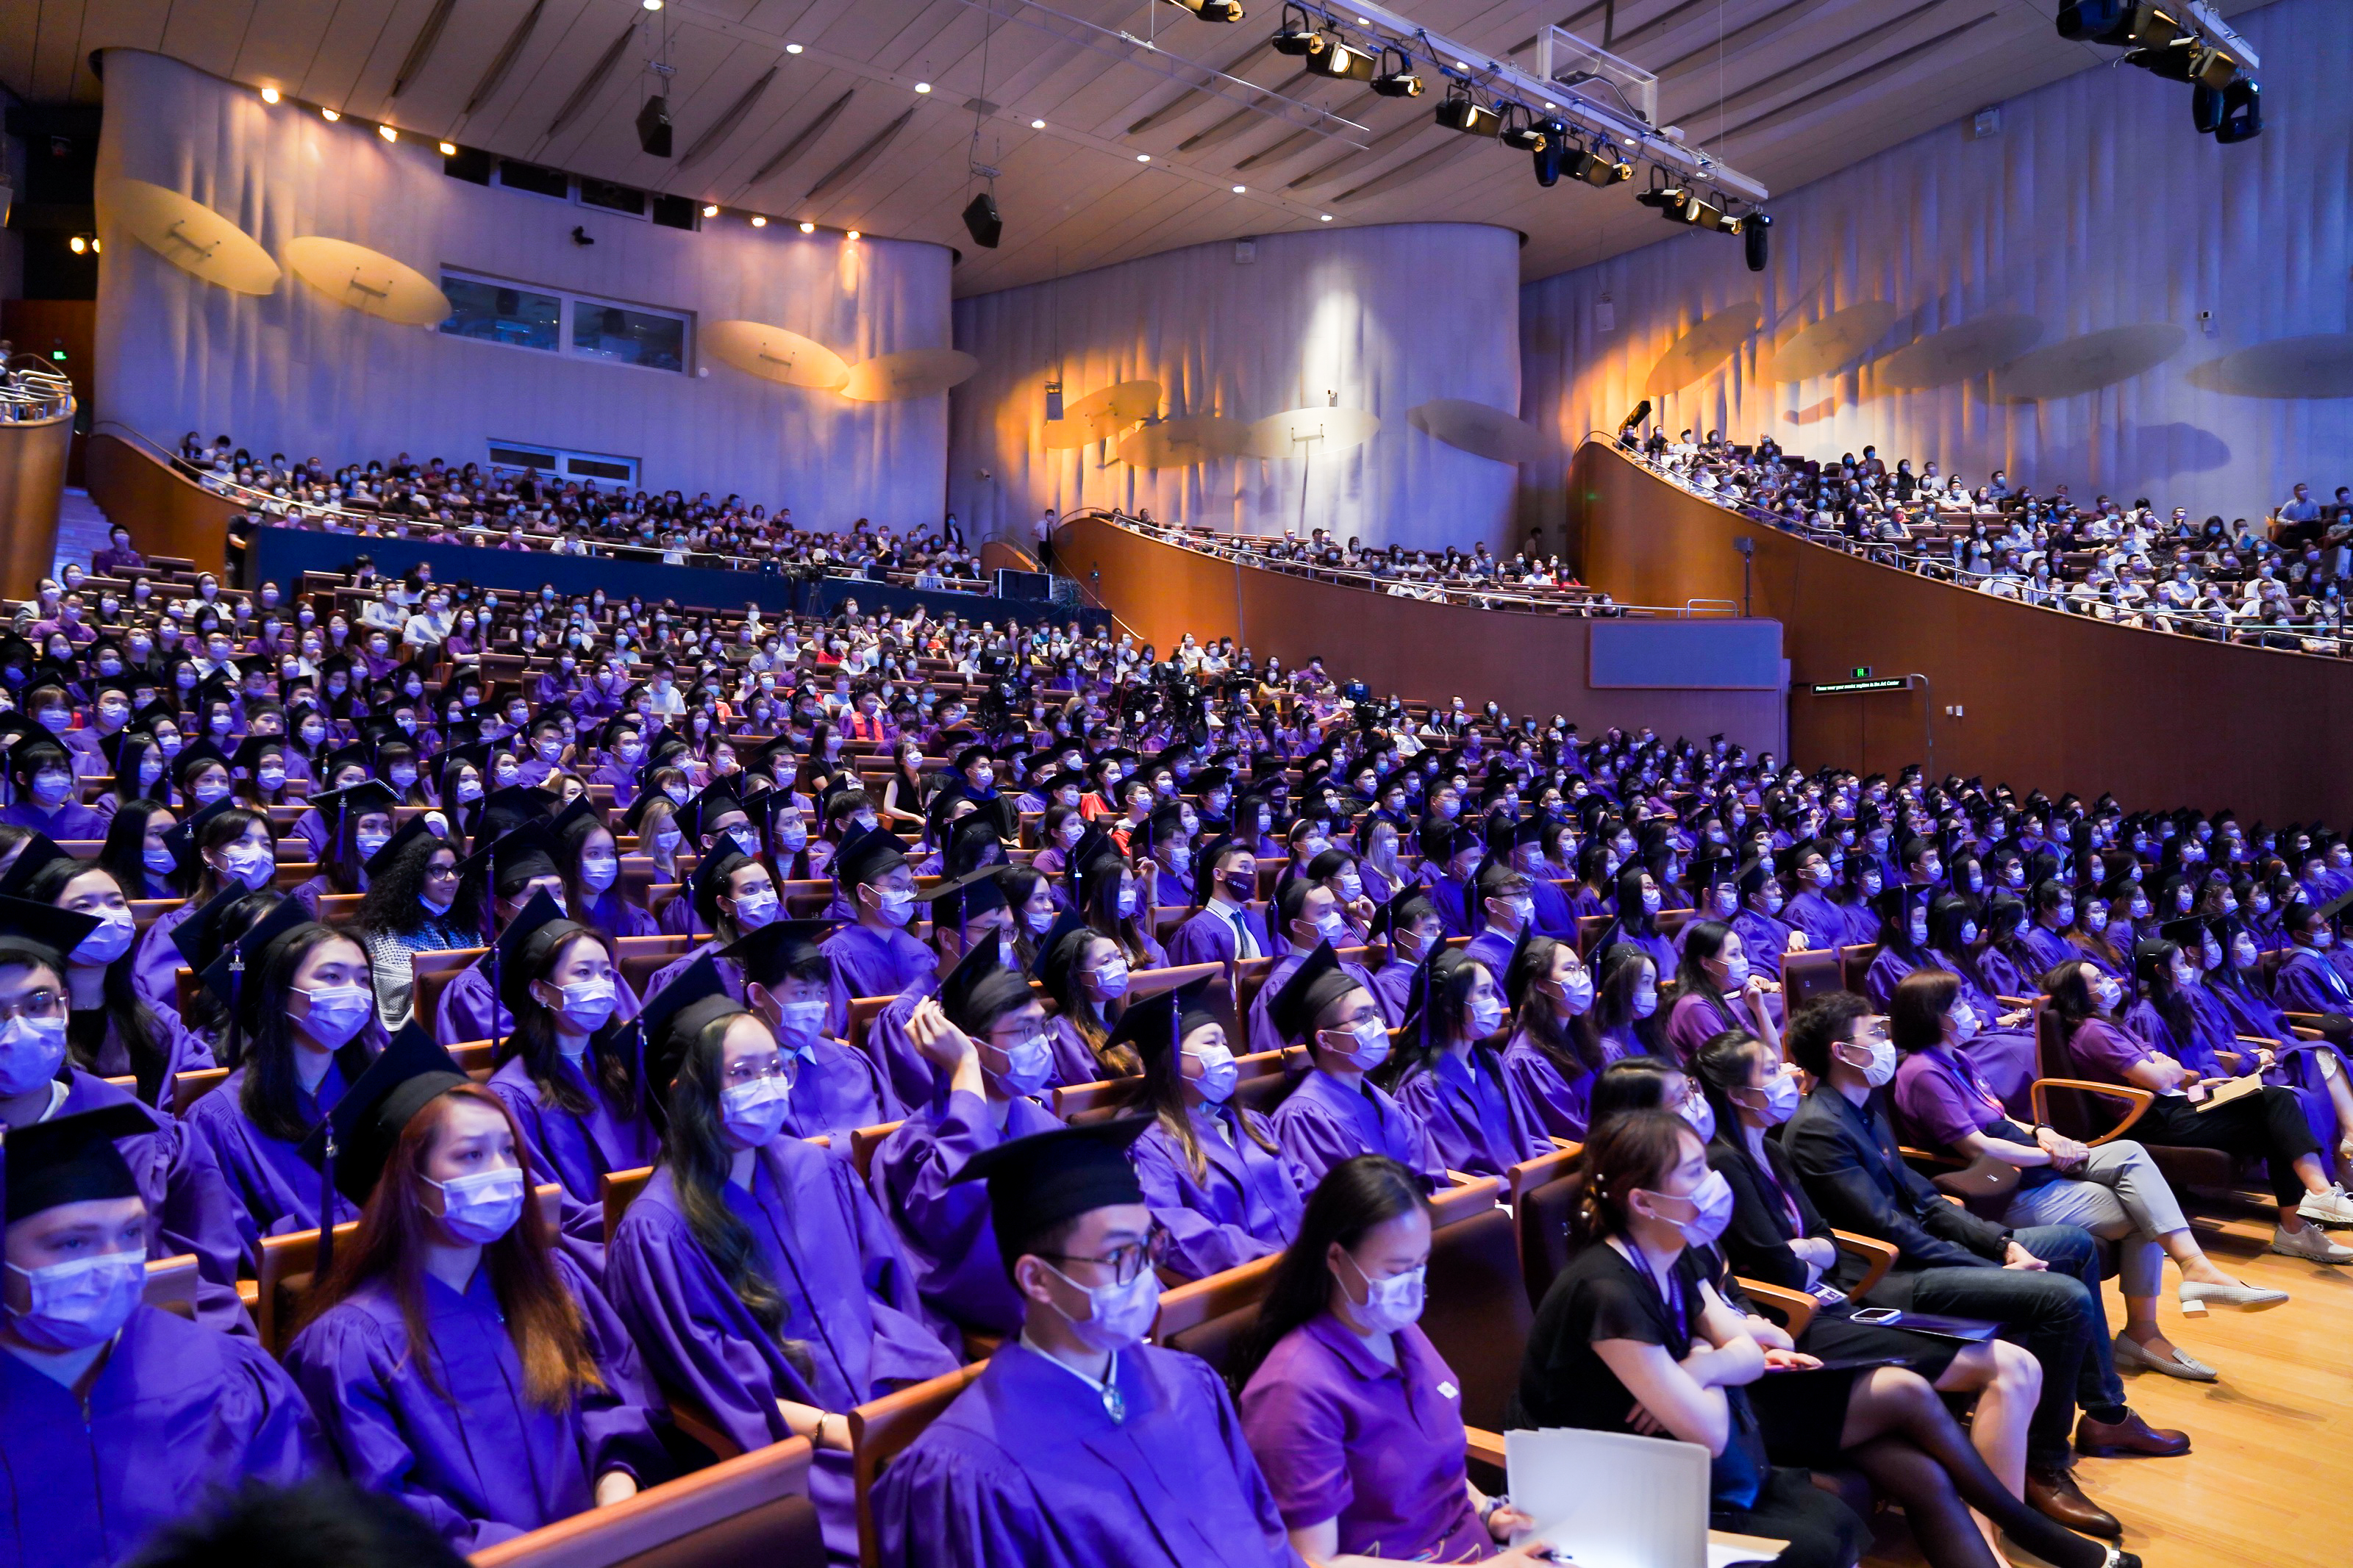 Graduates in purple robes fill theater seats